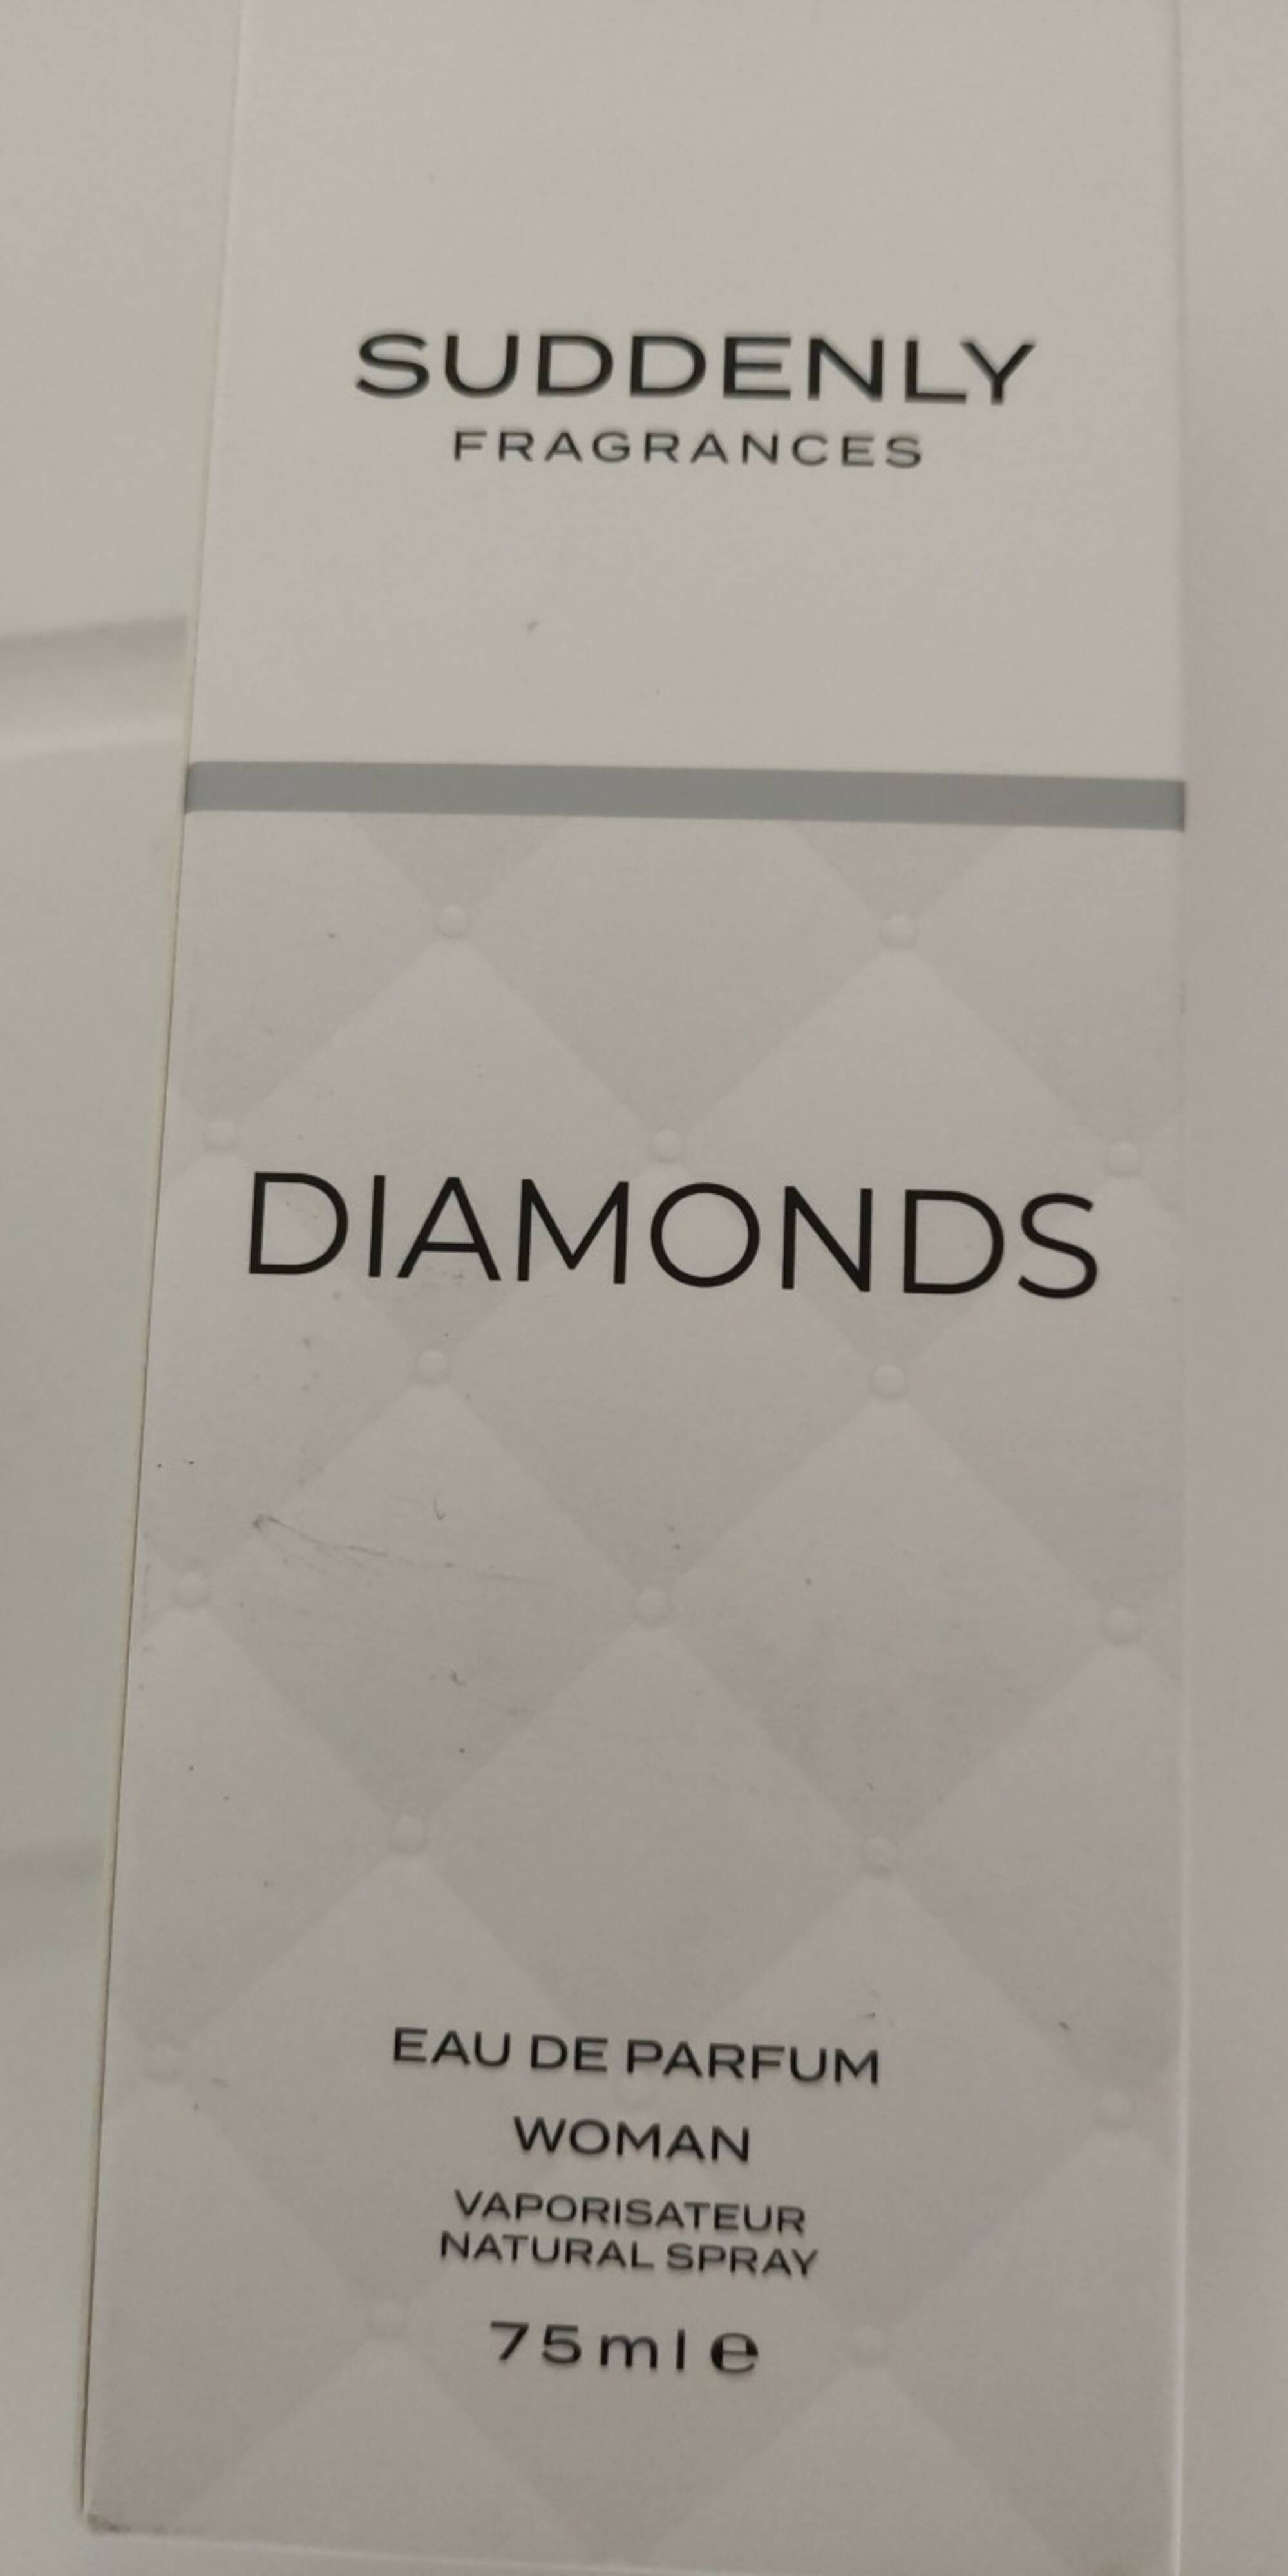 SUDDENLY - Diamonds - Eau de parfum woman